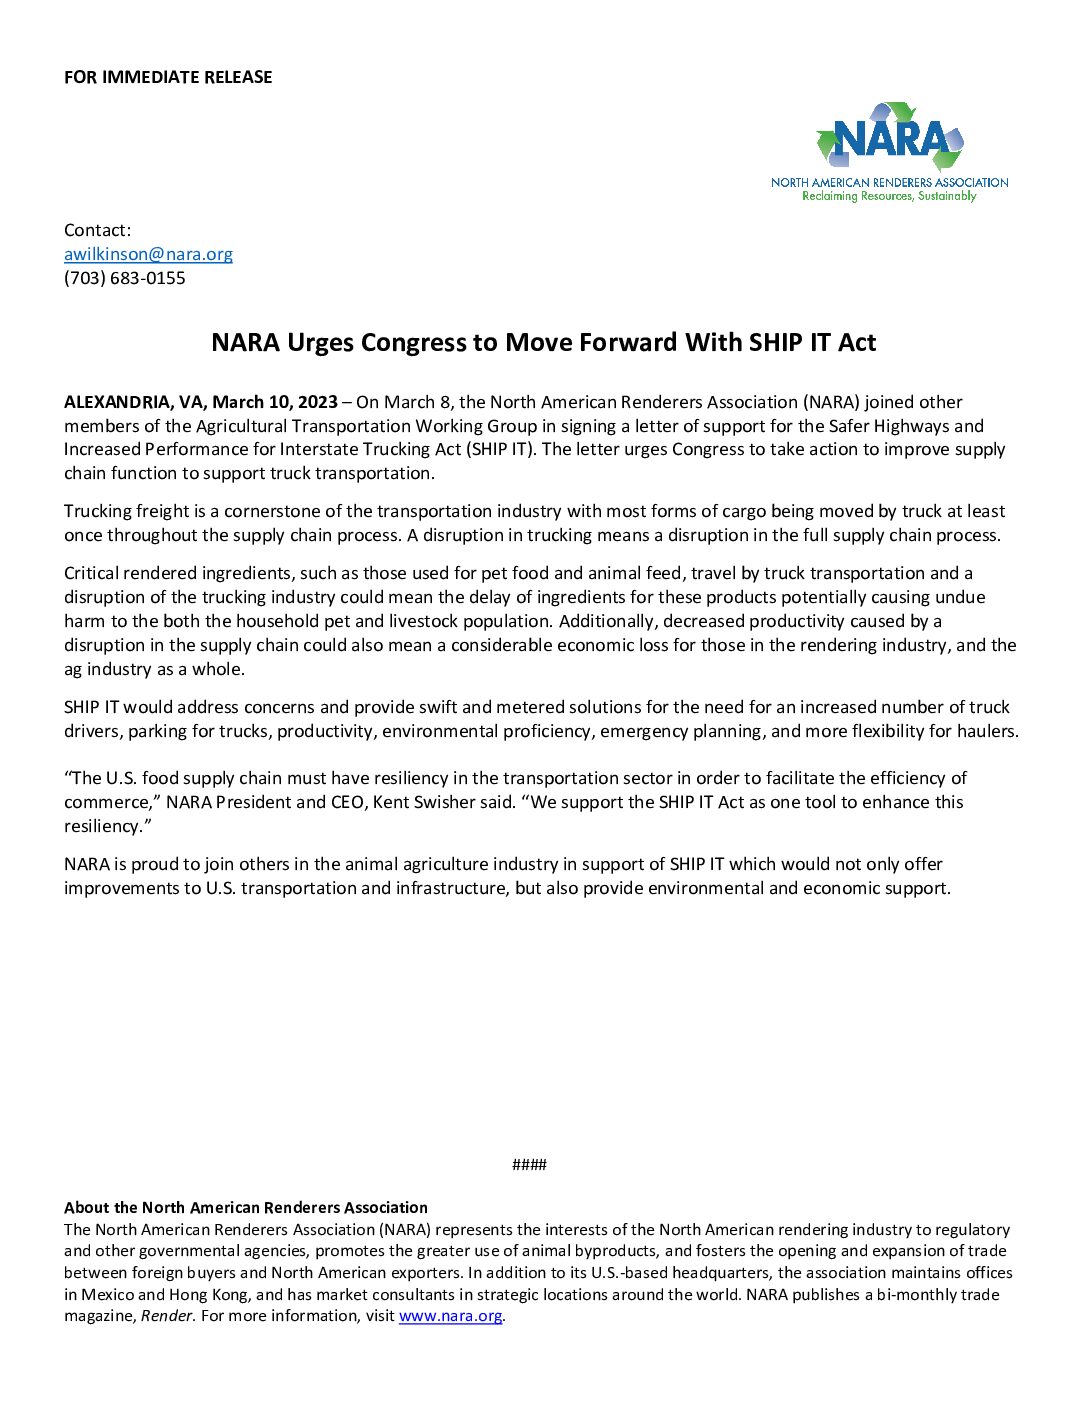 NARA Urges Congress to Move Forward with SHIP IT Act